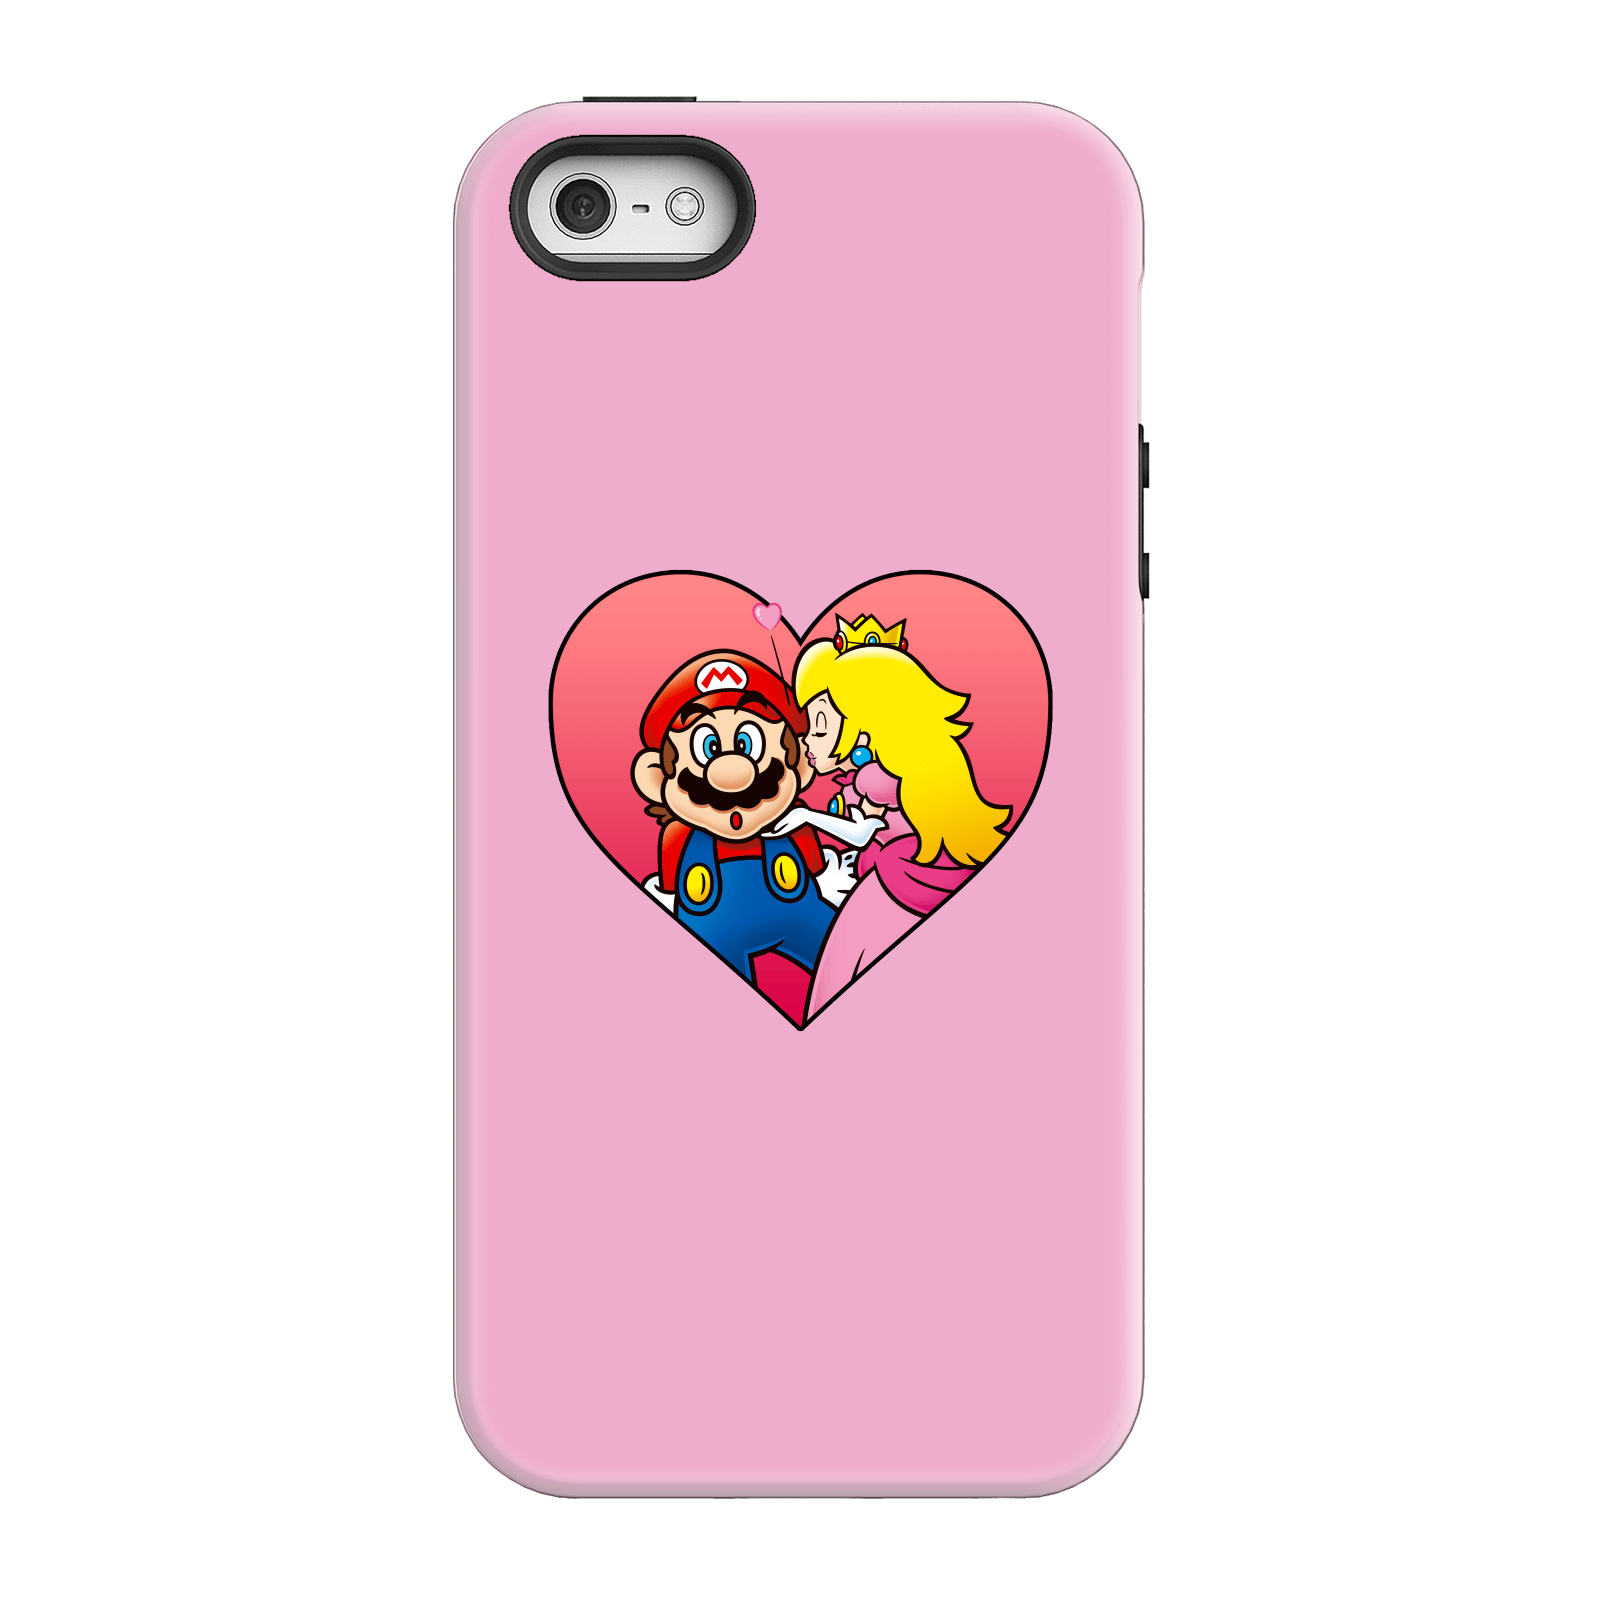 Nintendo Super Mario Peach Kiss Phone Case - iPhone 5/5s - Tough Case - Gloss